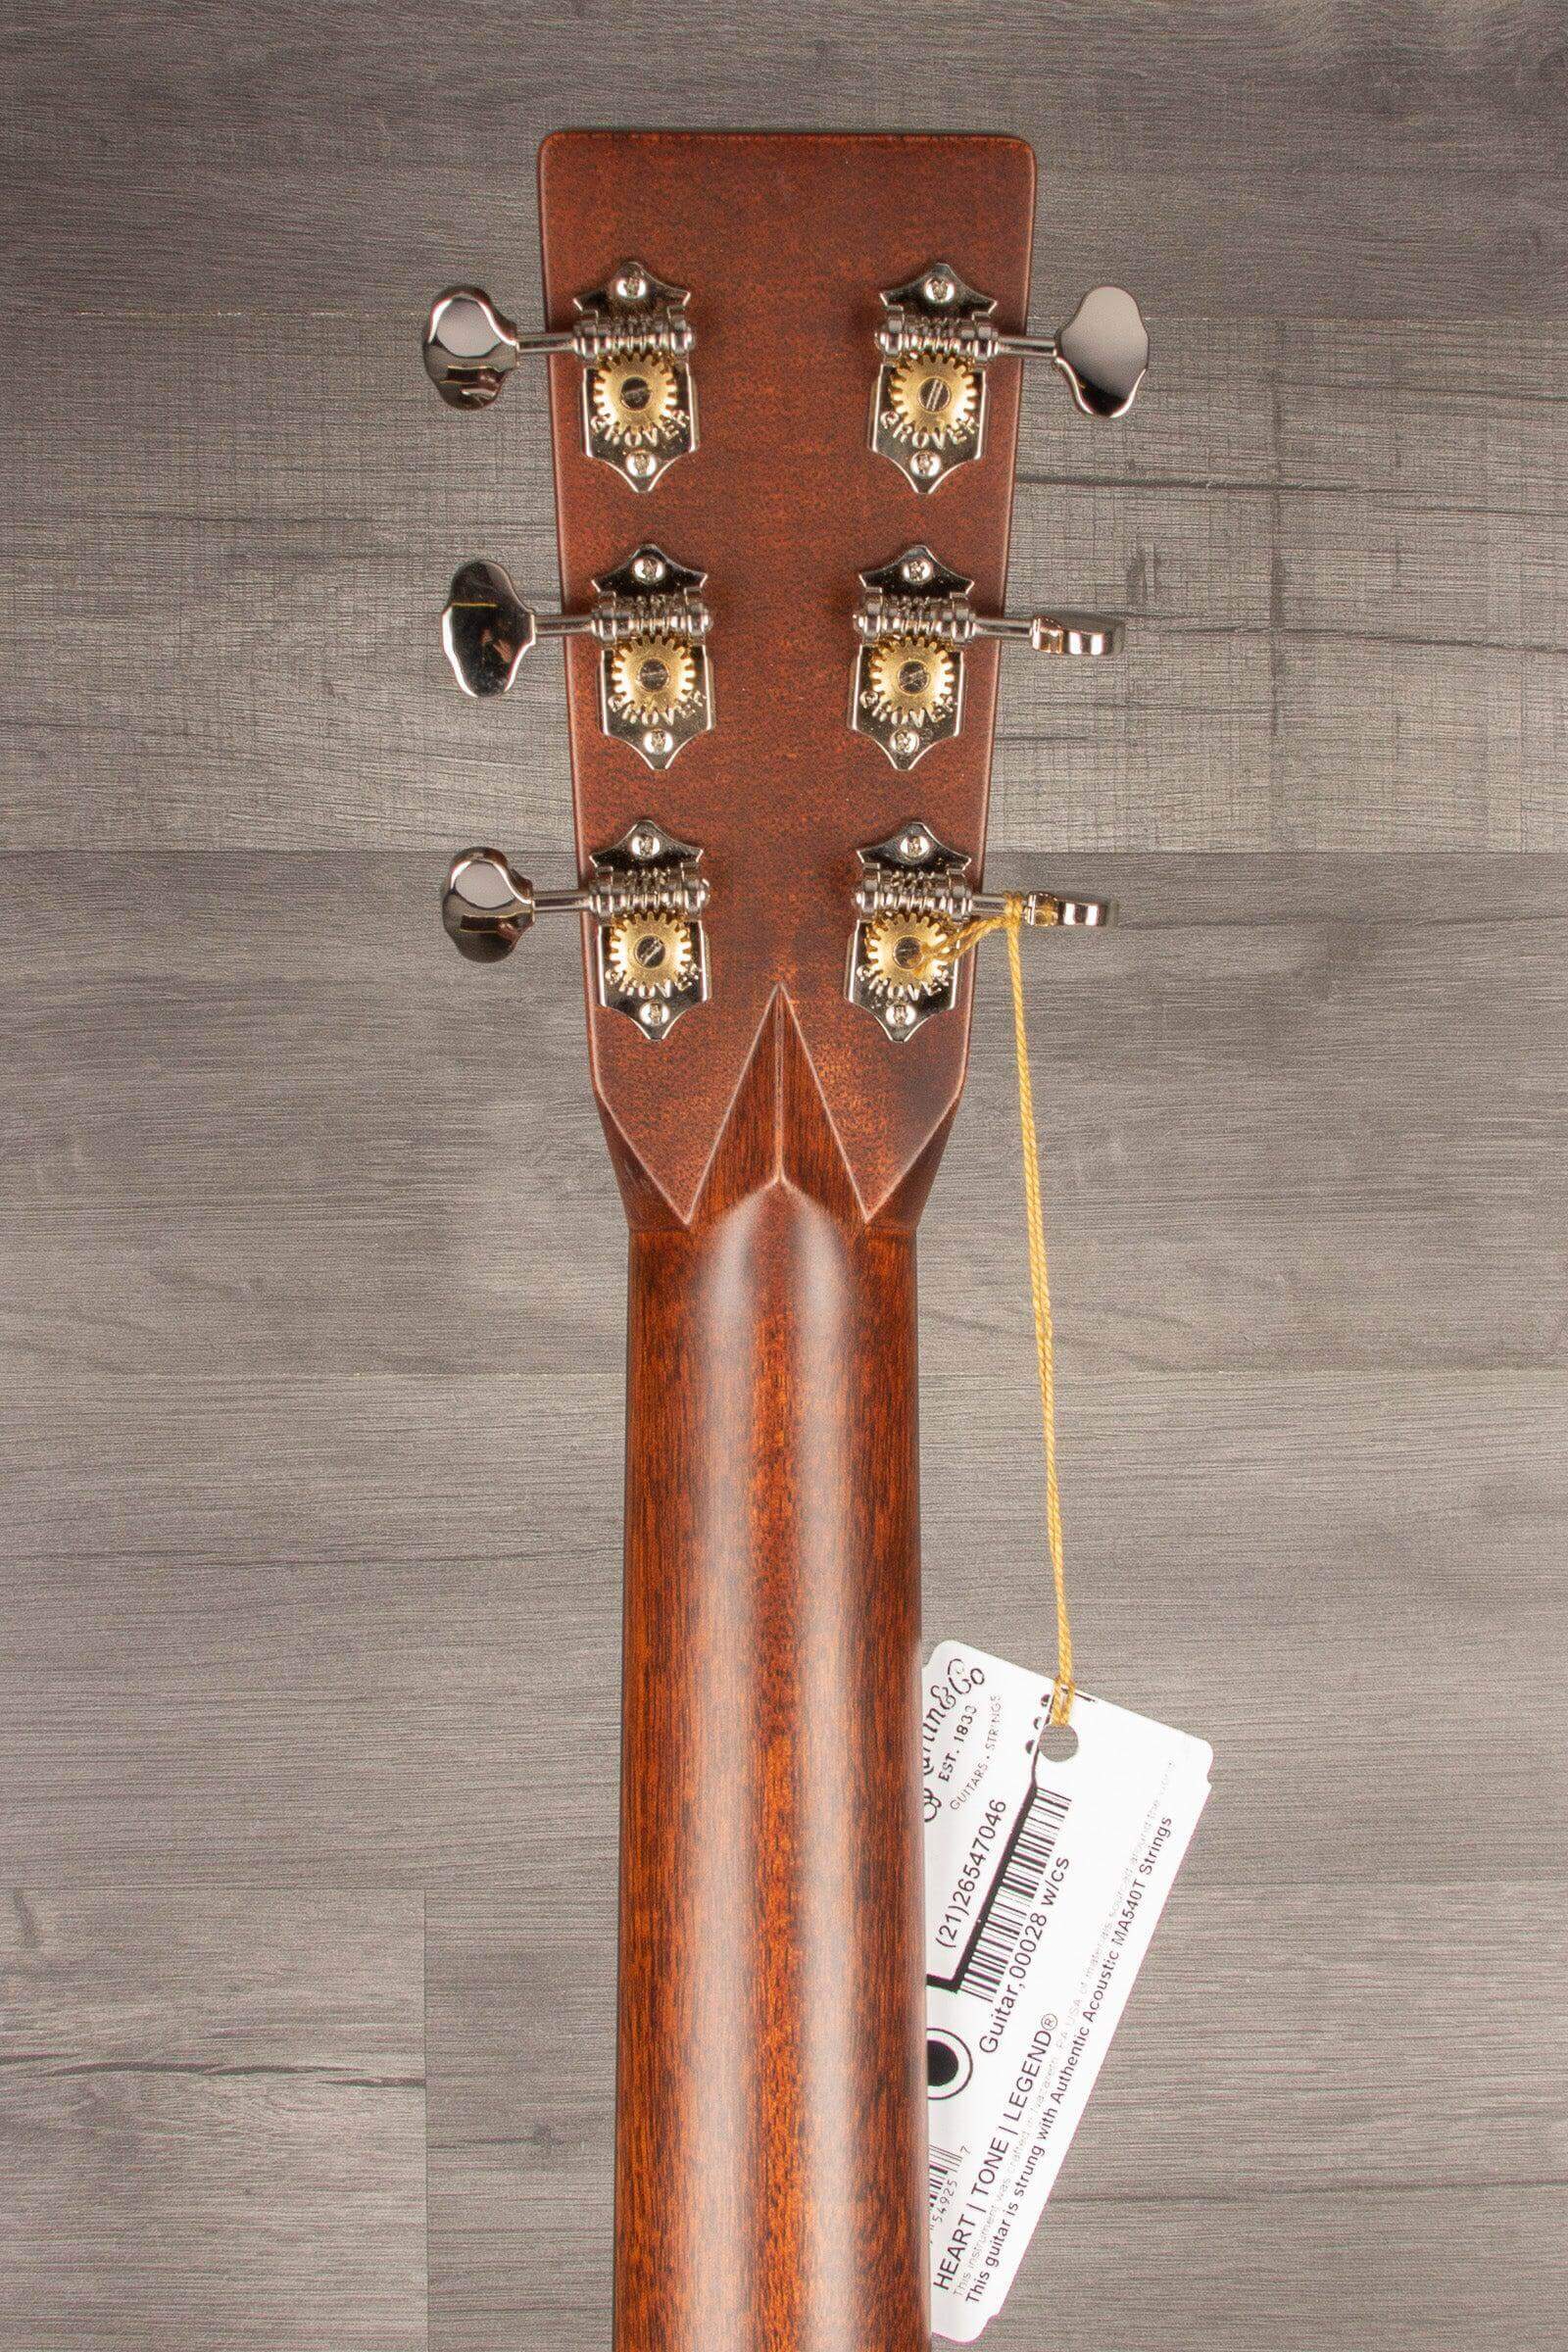 Martin 000-28 Acoustic guitar - Musicstreet